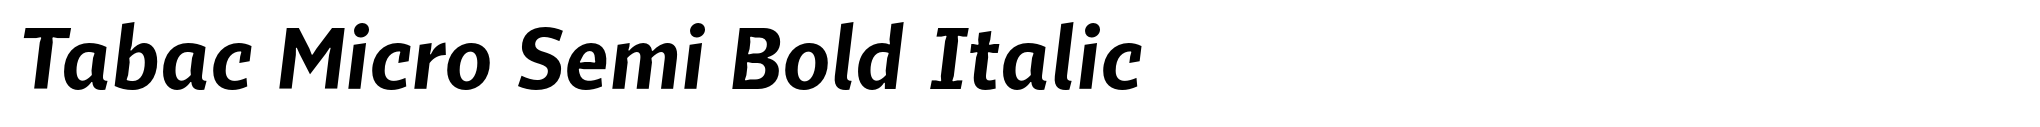 Tabac Micro Semi Bold Italic image